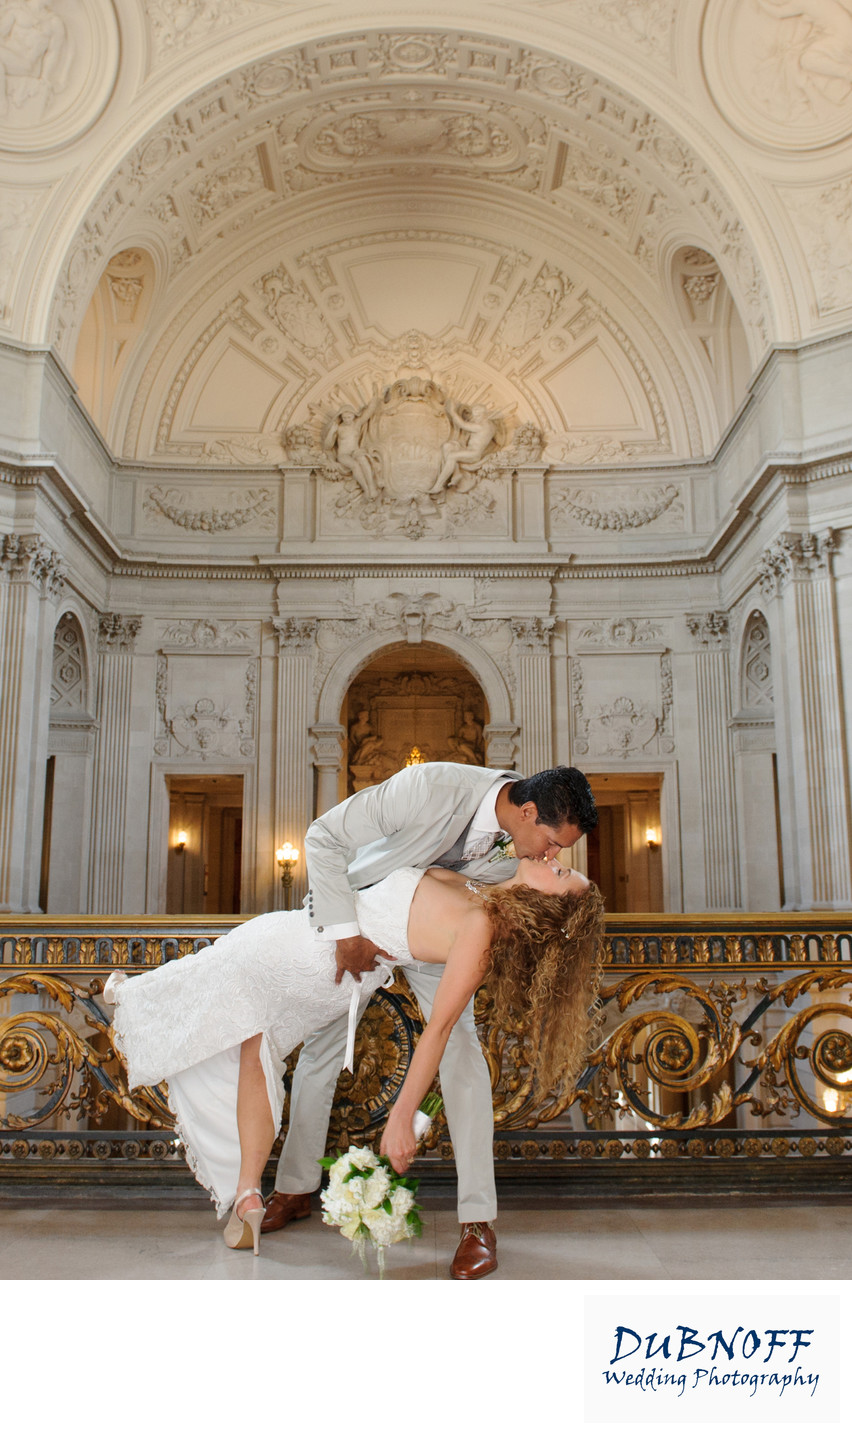 San Francisco City Hall Wedding Photographer - Romantic Image